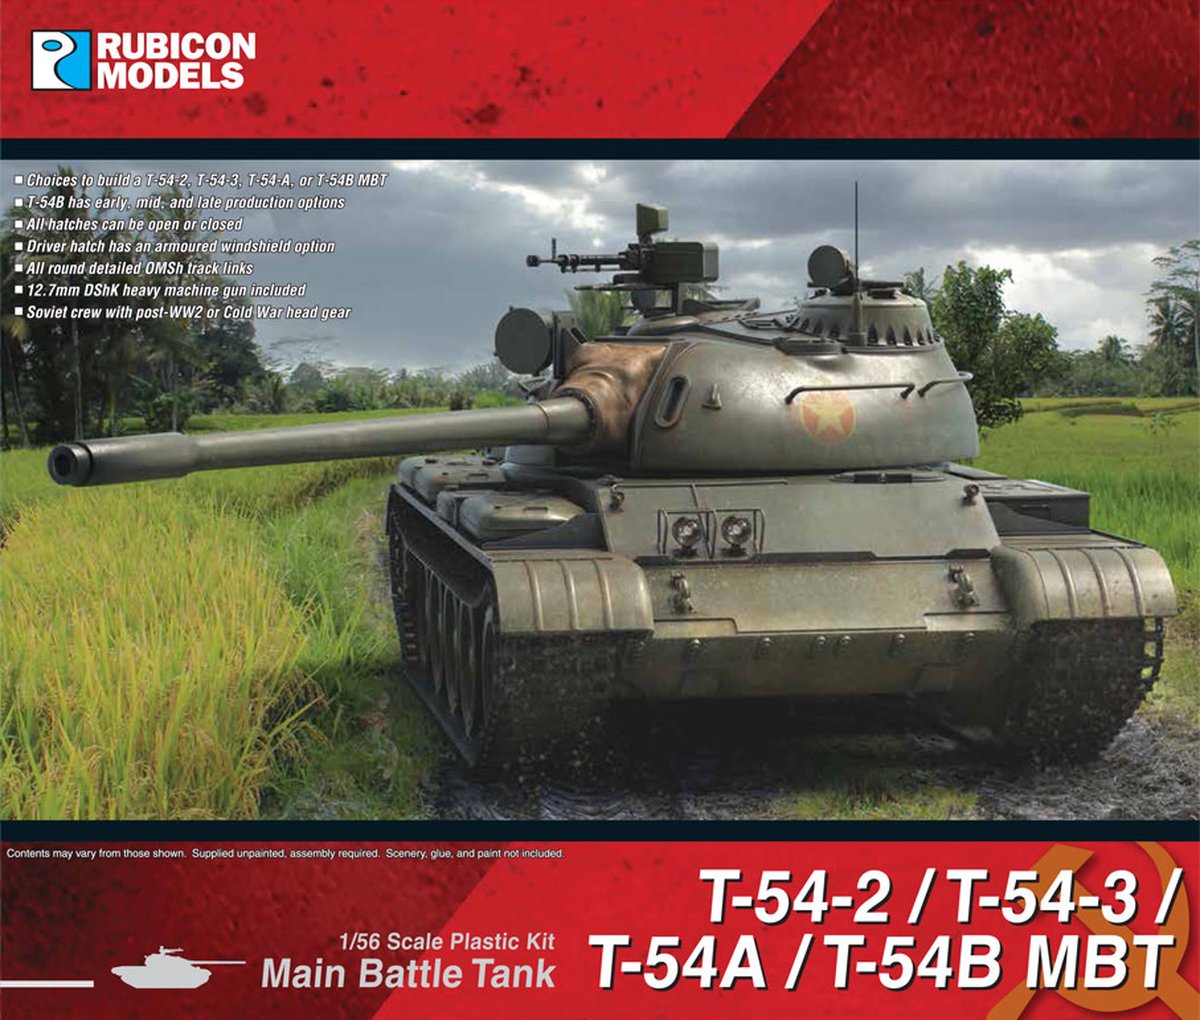 T-54-2 / T-54-3 / T-54A / T-54B MBT